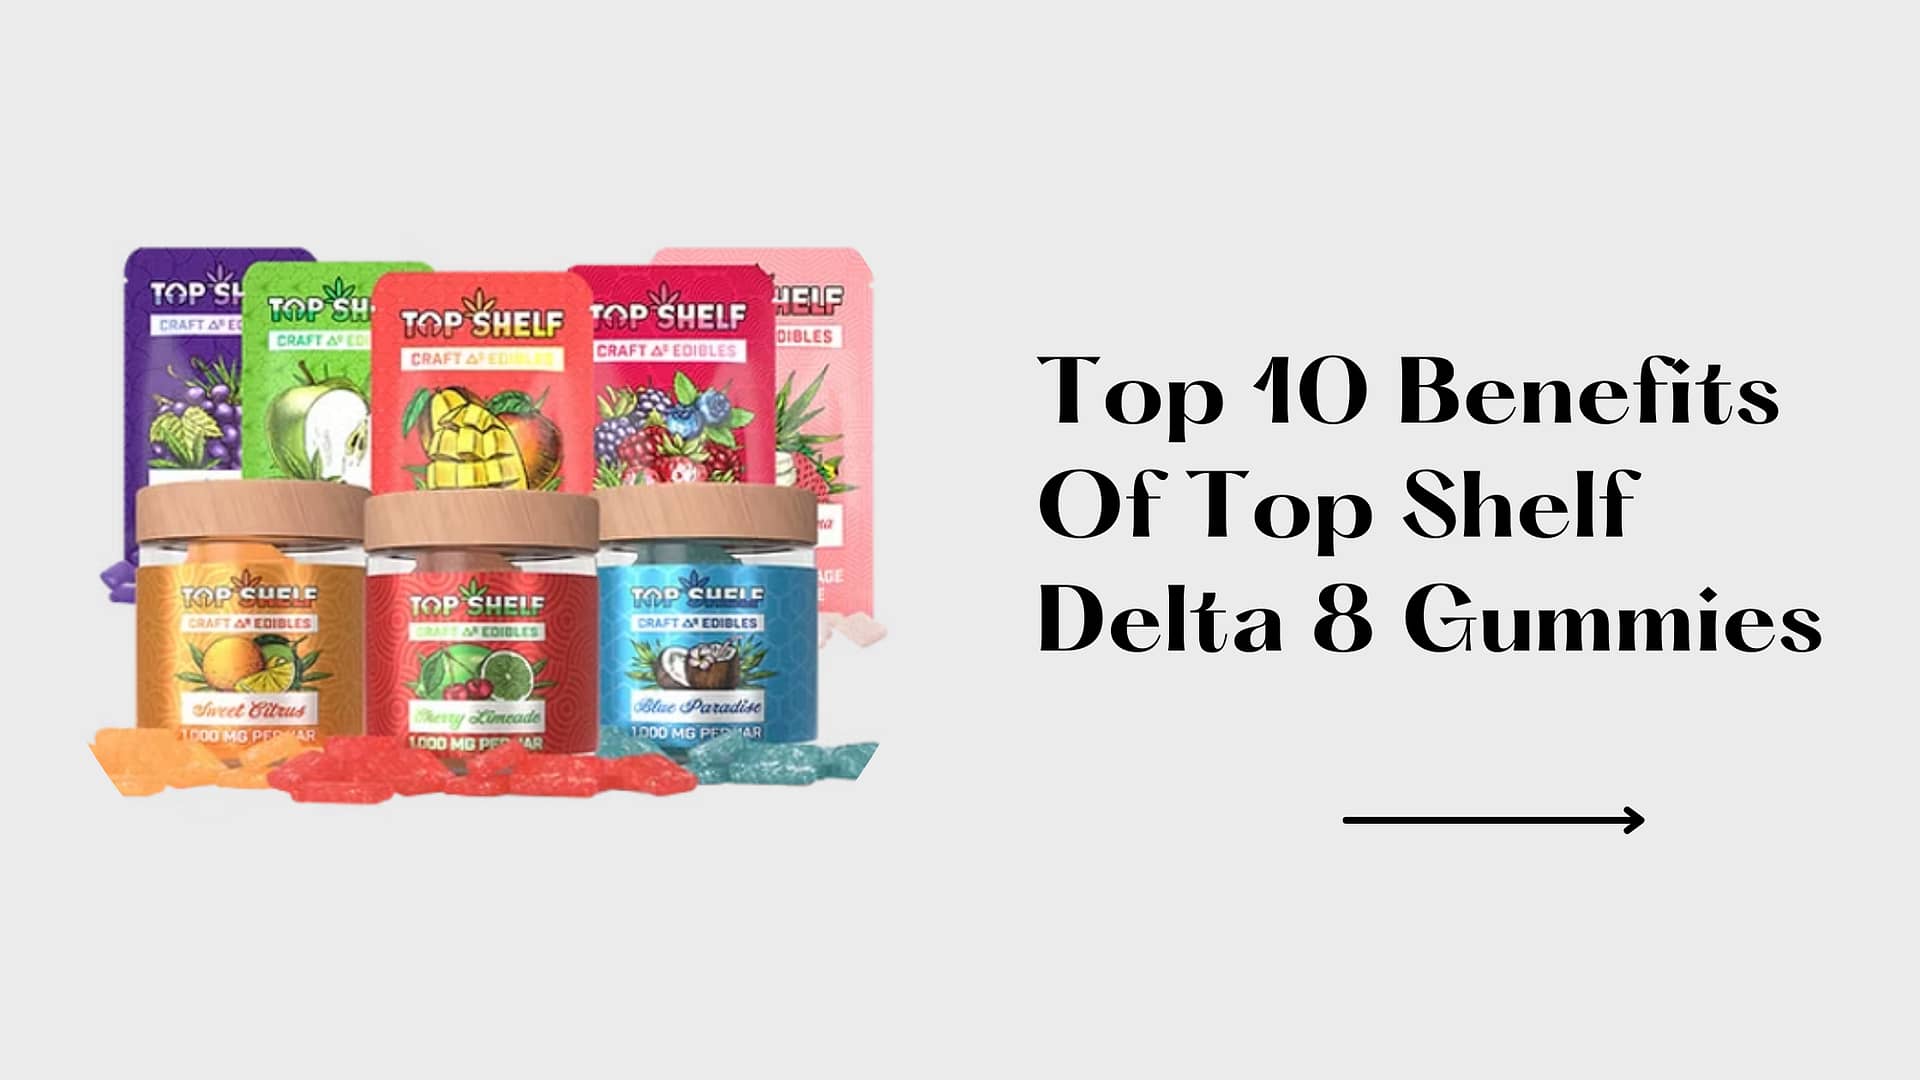 _Choose Top 10 Benefits Of Top Shelf Delta 8 GummiesCBD & THC Oil